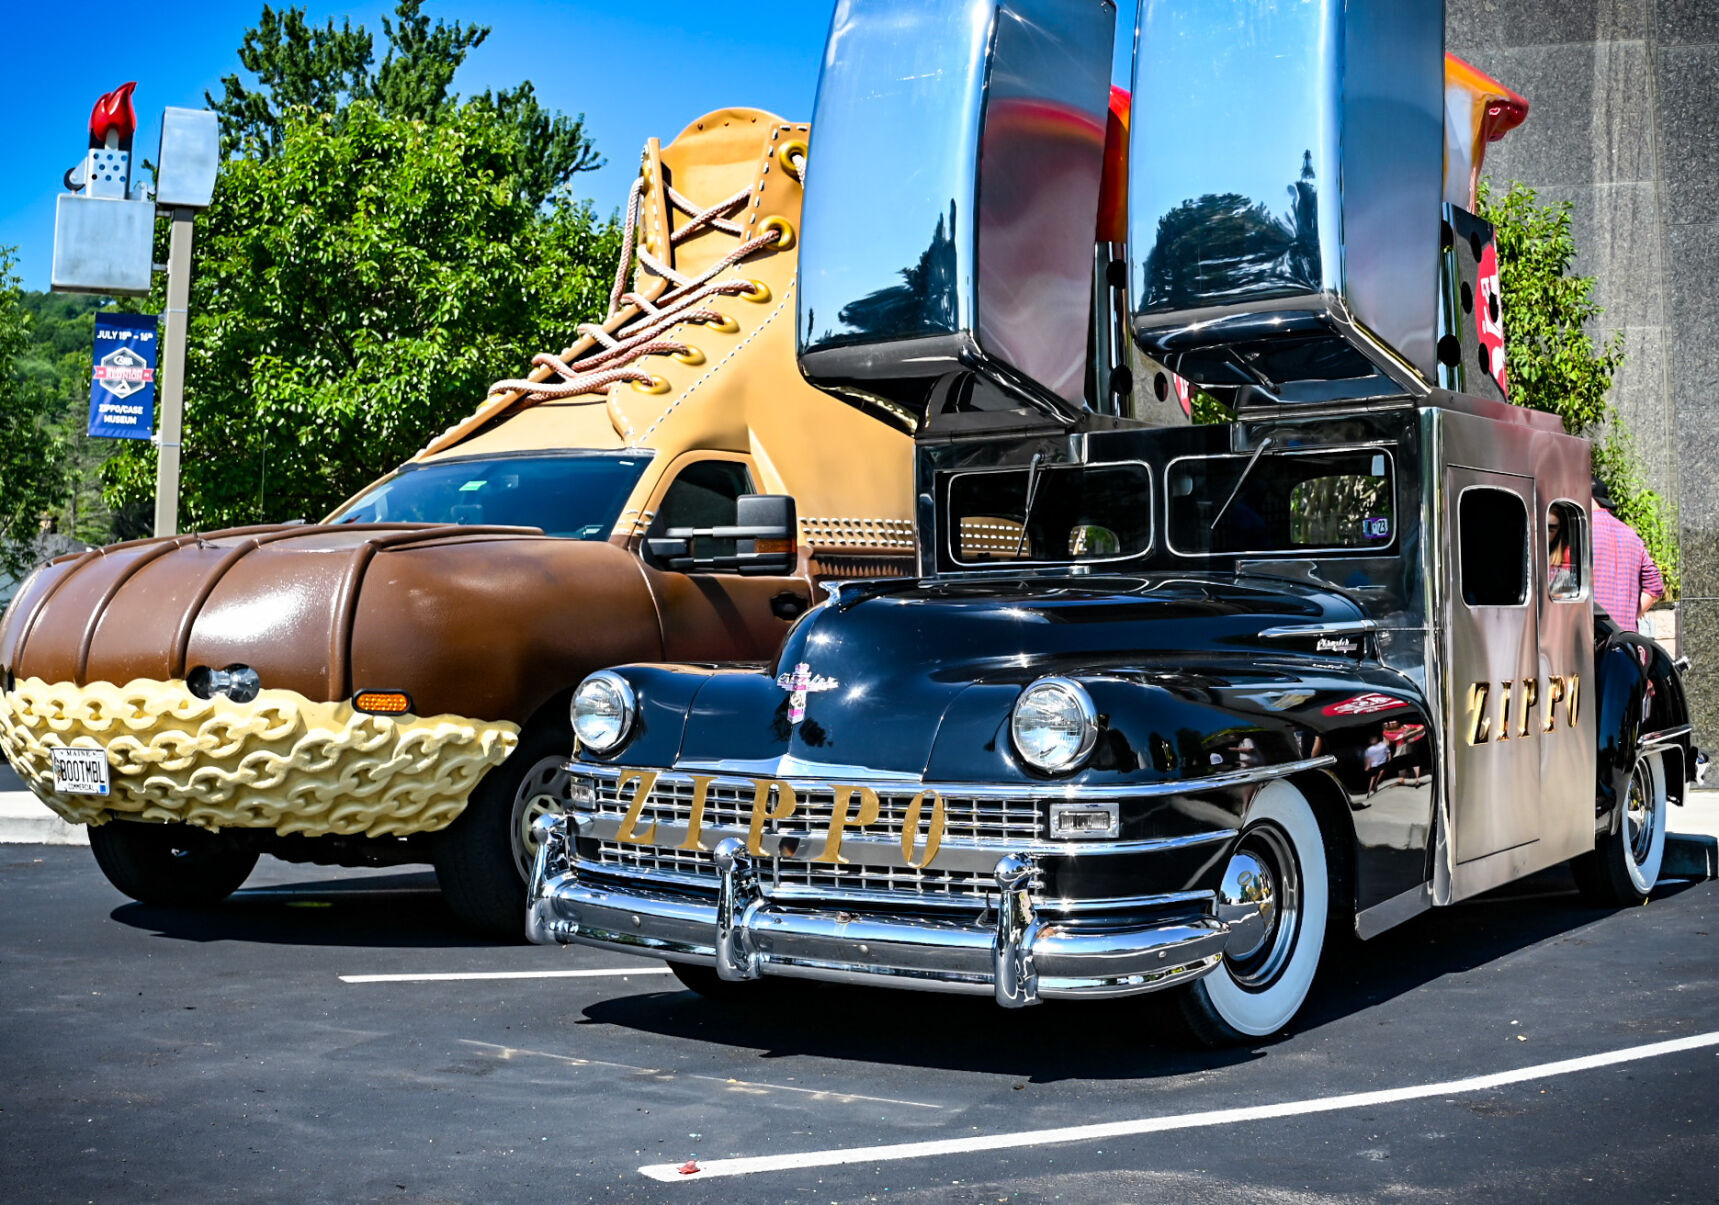 L.L. Bean Bootmobile visits Zippo Car Tuesday | News | bradfordera.com